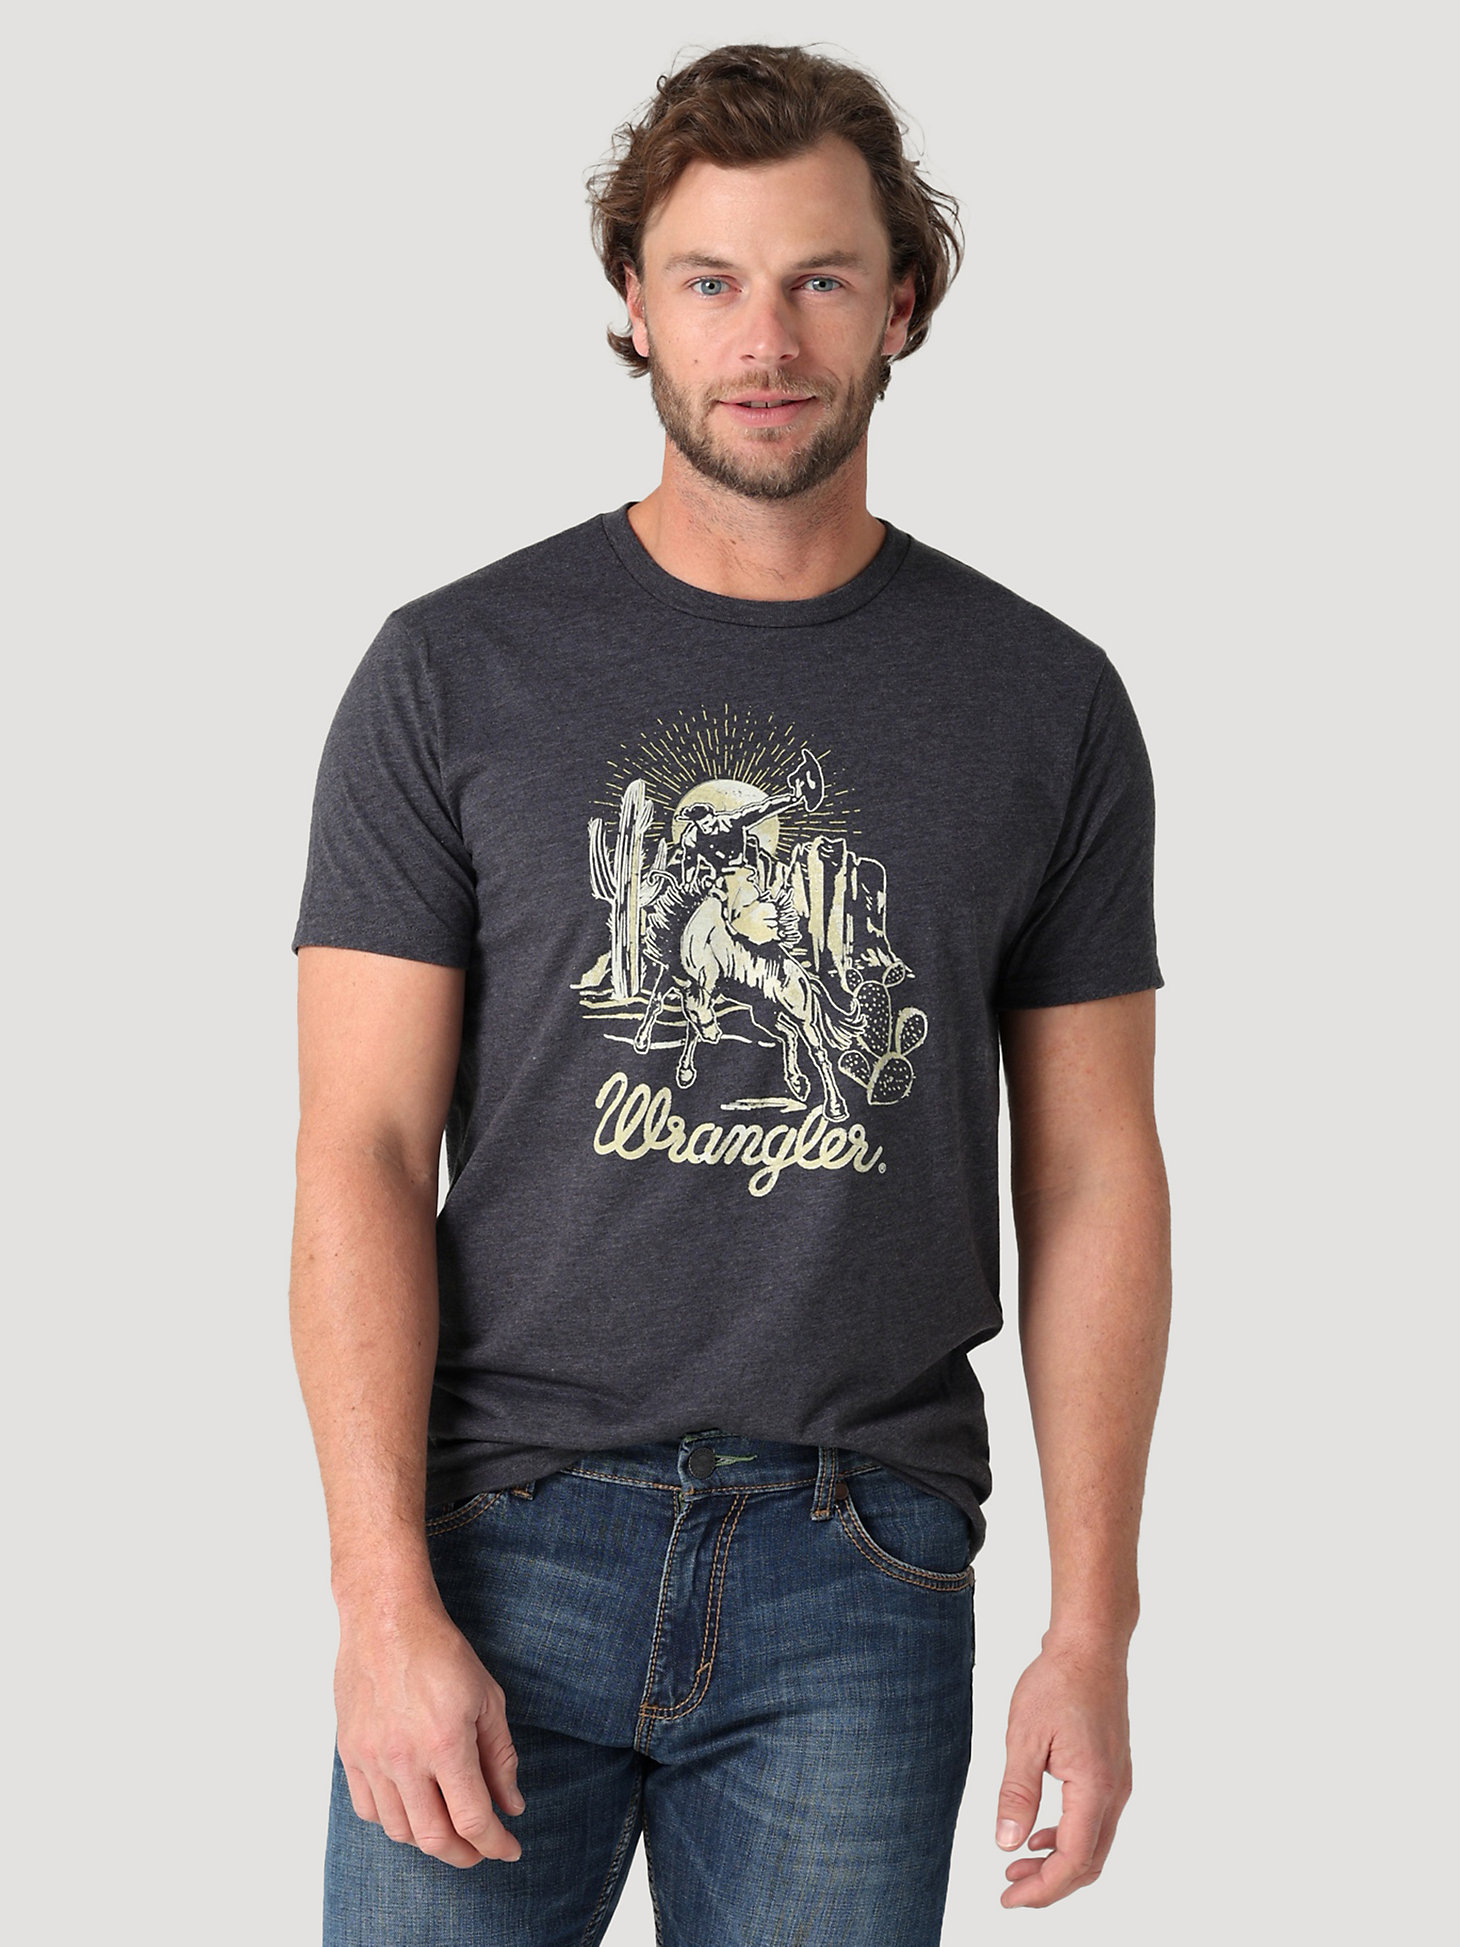 Men's Bronco Desert Graphic T-Shirt in Charcoal Heather alternative view 1